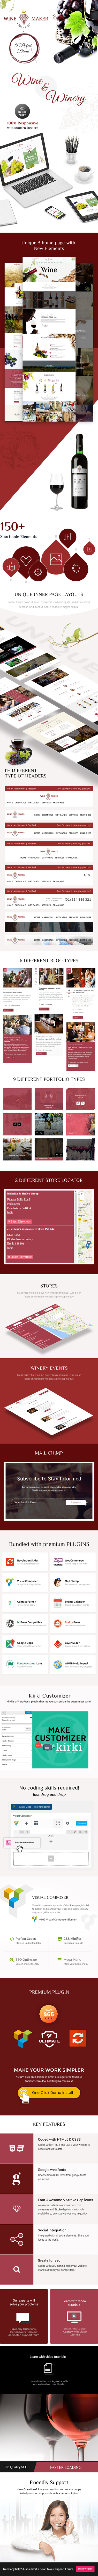 WordPress theme Wine Maker - Multi Purpose Wine Website Theme (Retail)